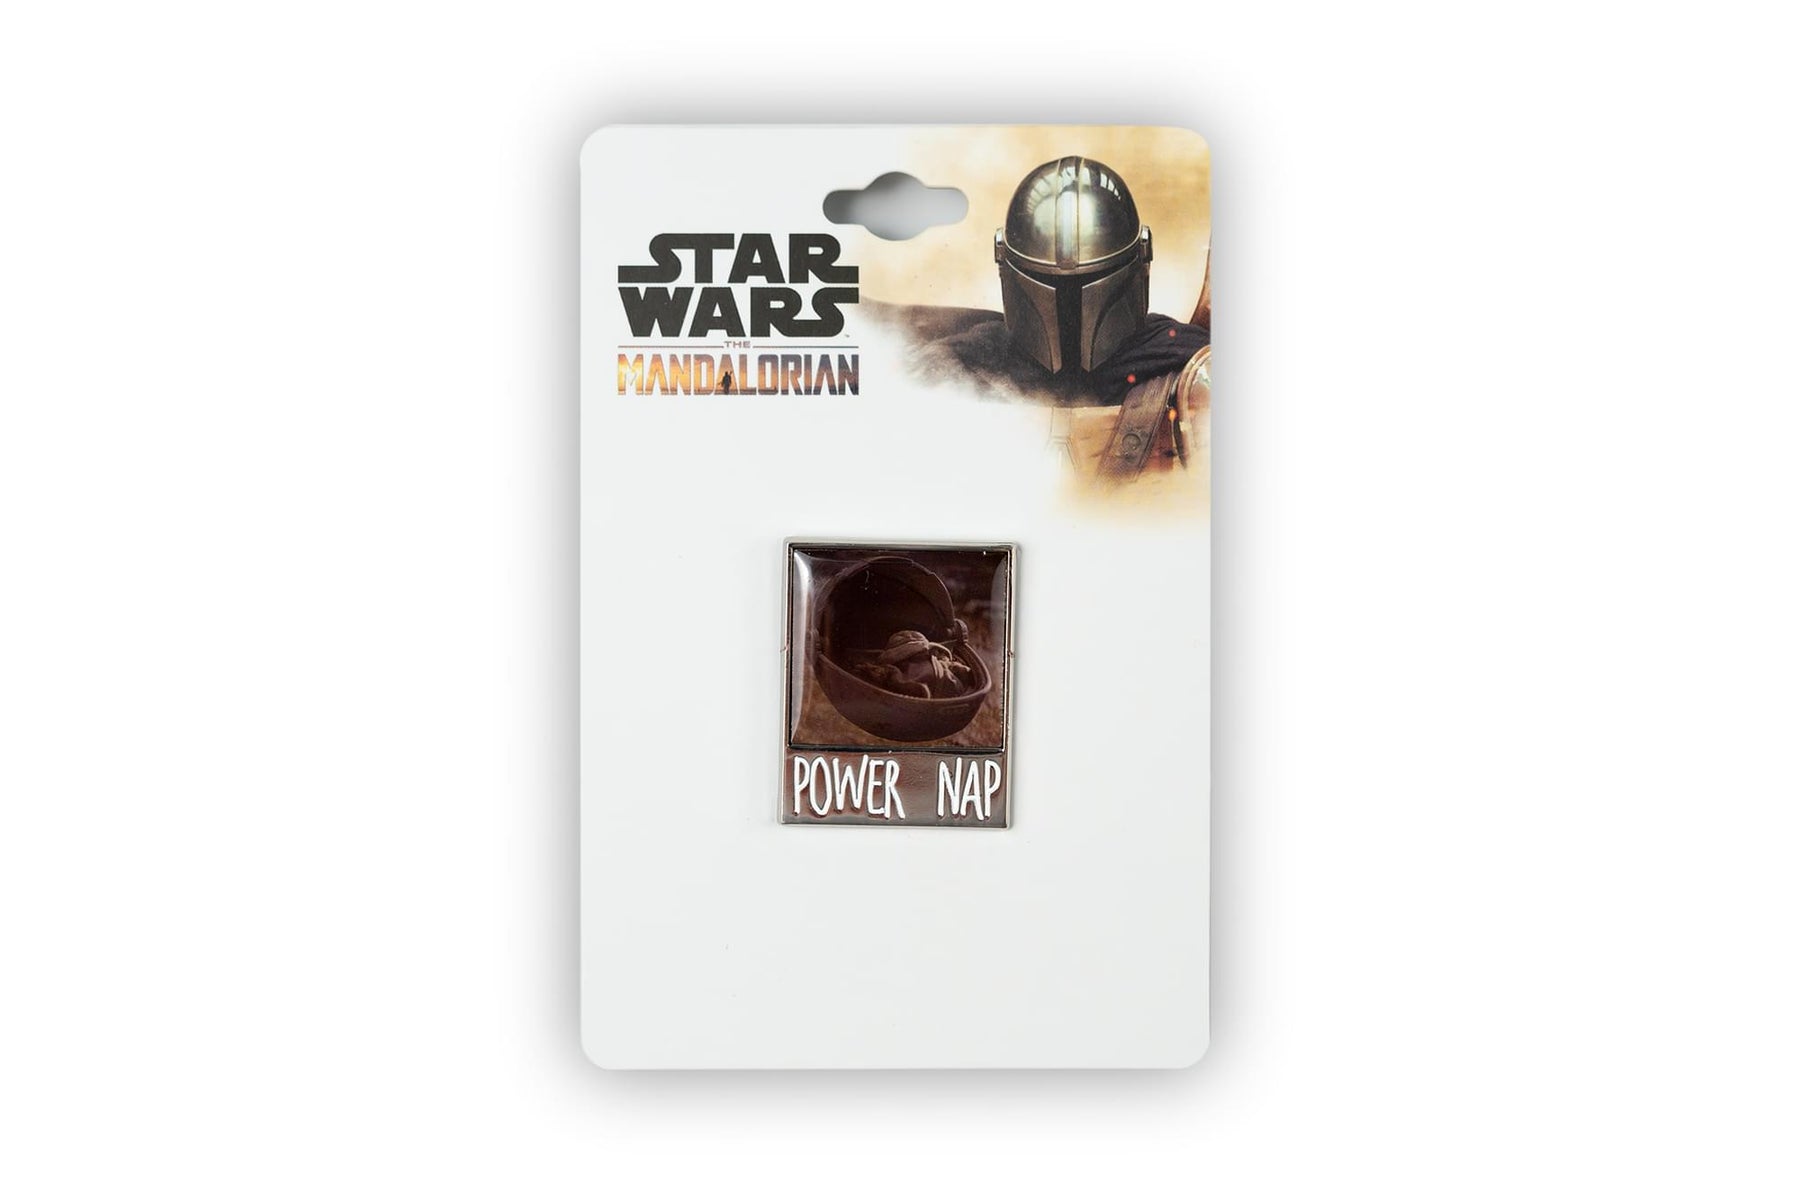 Star Wars: The Mandalorian The Child Collector Pin | Baby Yoda Power Nap